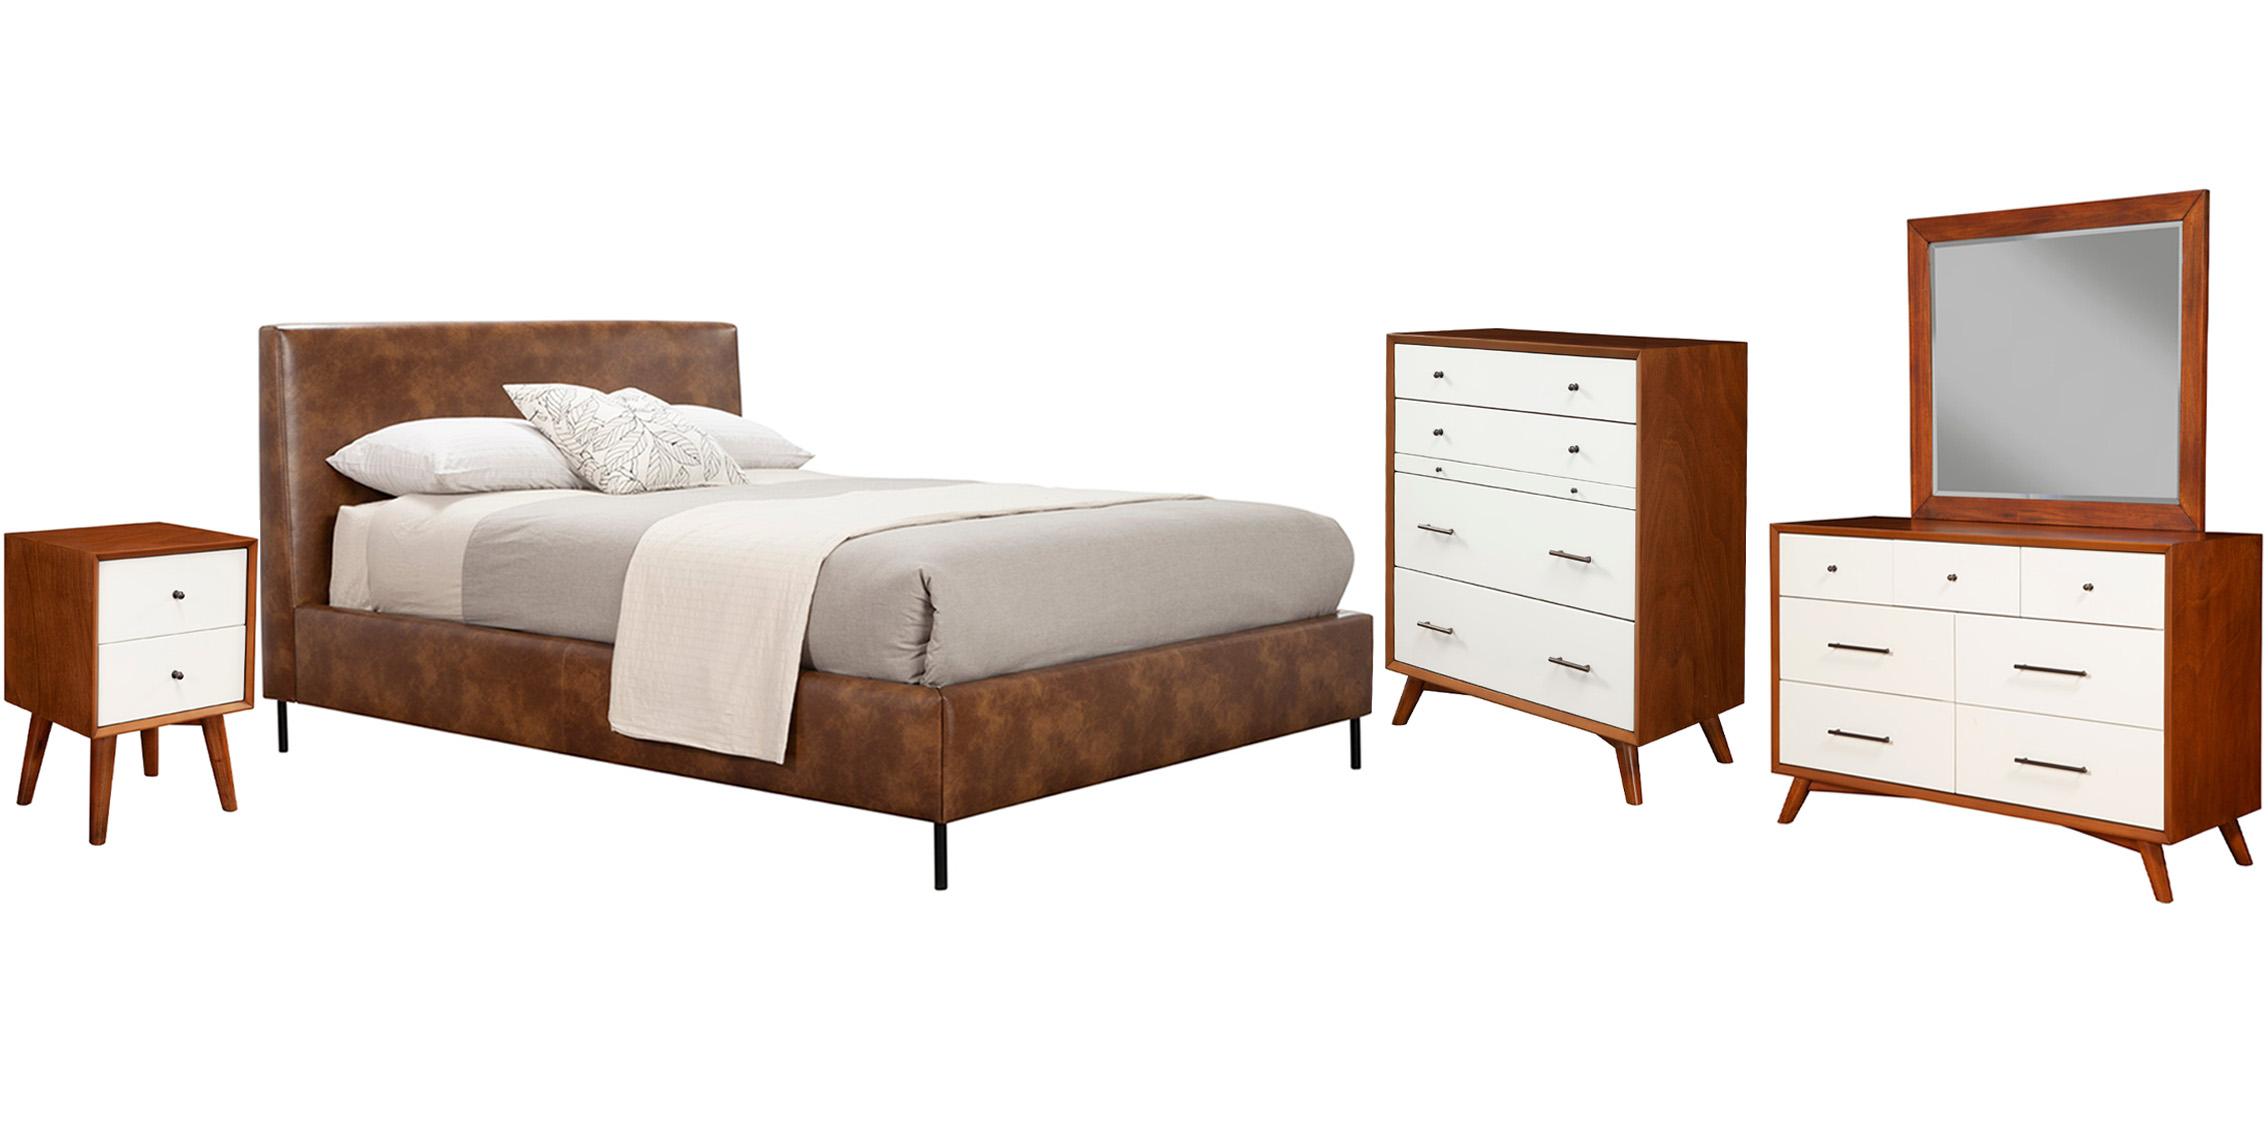 Modern, Rustic Platform Bedroom Set SOPHIA/FLYNN 6902F-BRN-Set-5 in Brown Faux Leather